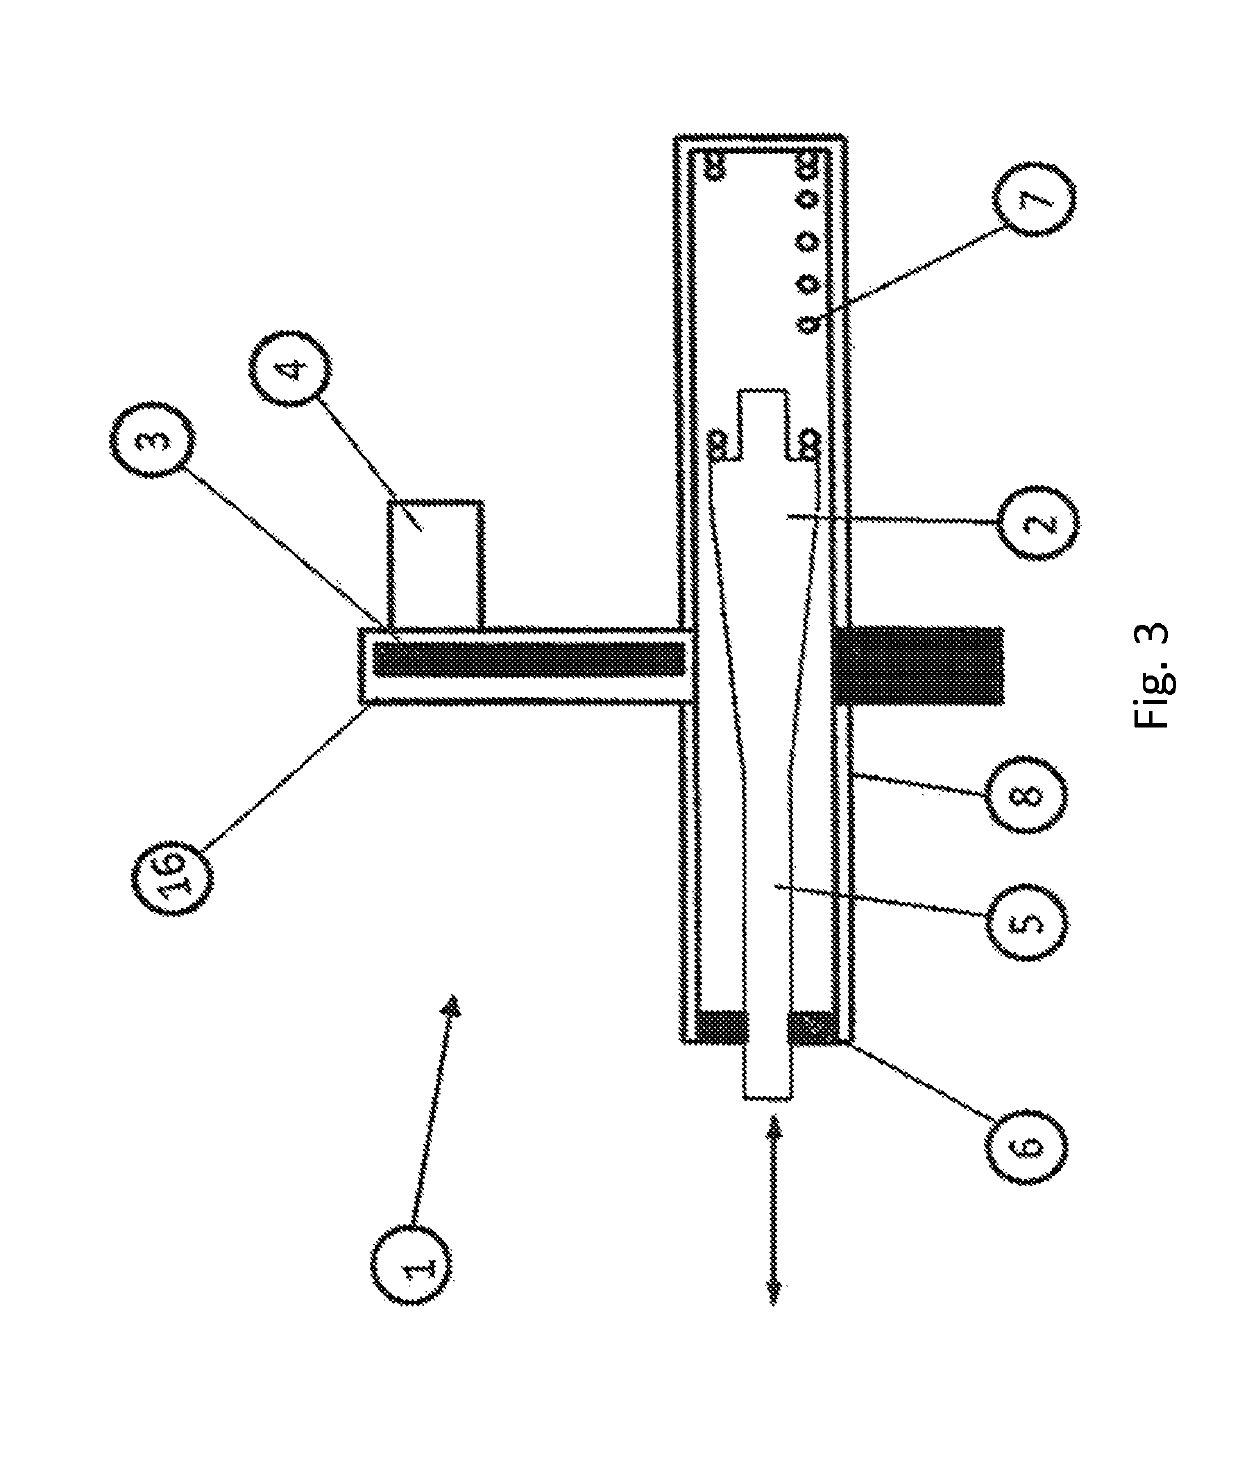 Path measurement method for a magnetic sensor and sensor